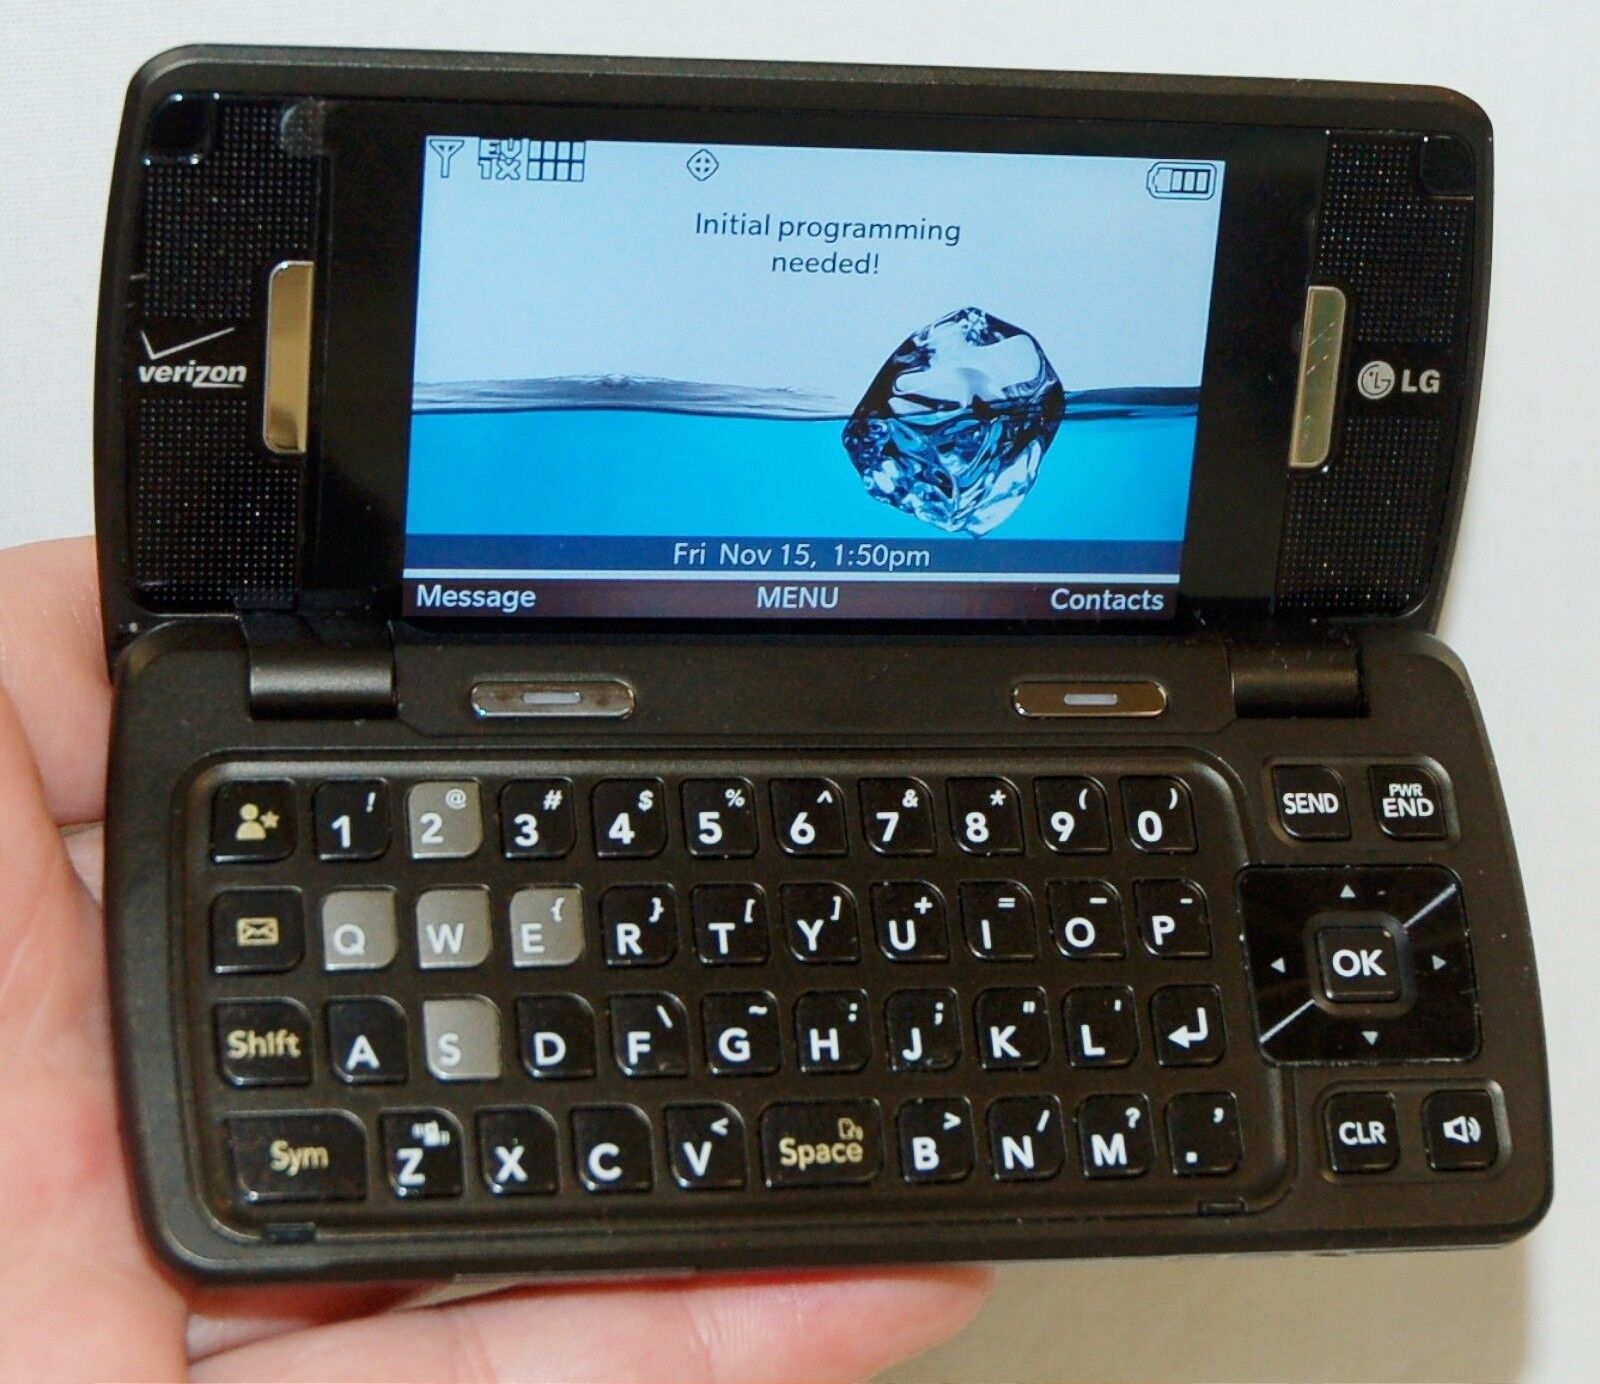 LG Verizon enV Touch Cell Phone Qwerty Keys Flip Bluetooth WiFi LG-VX11000 -C